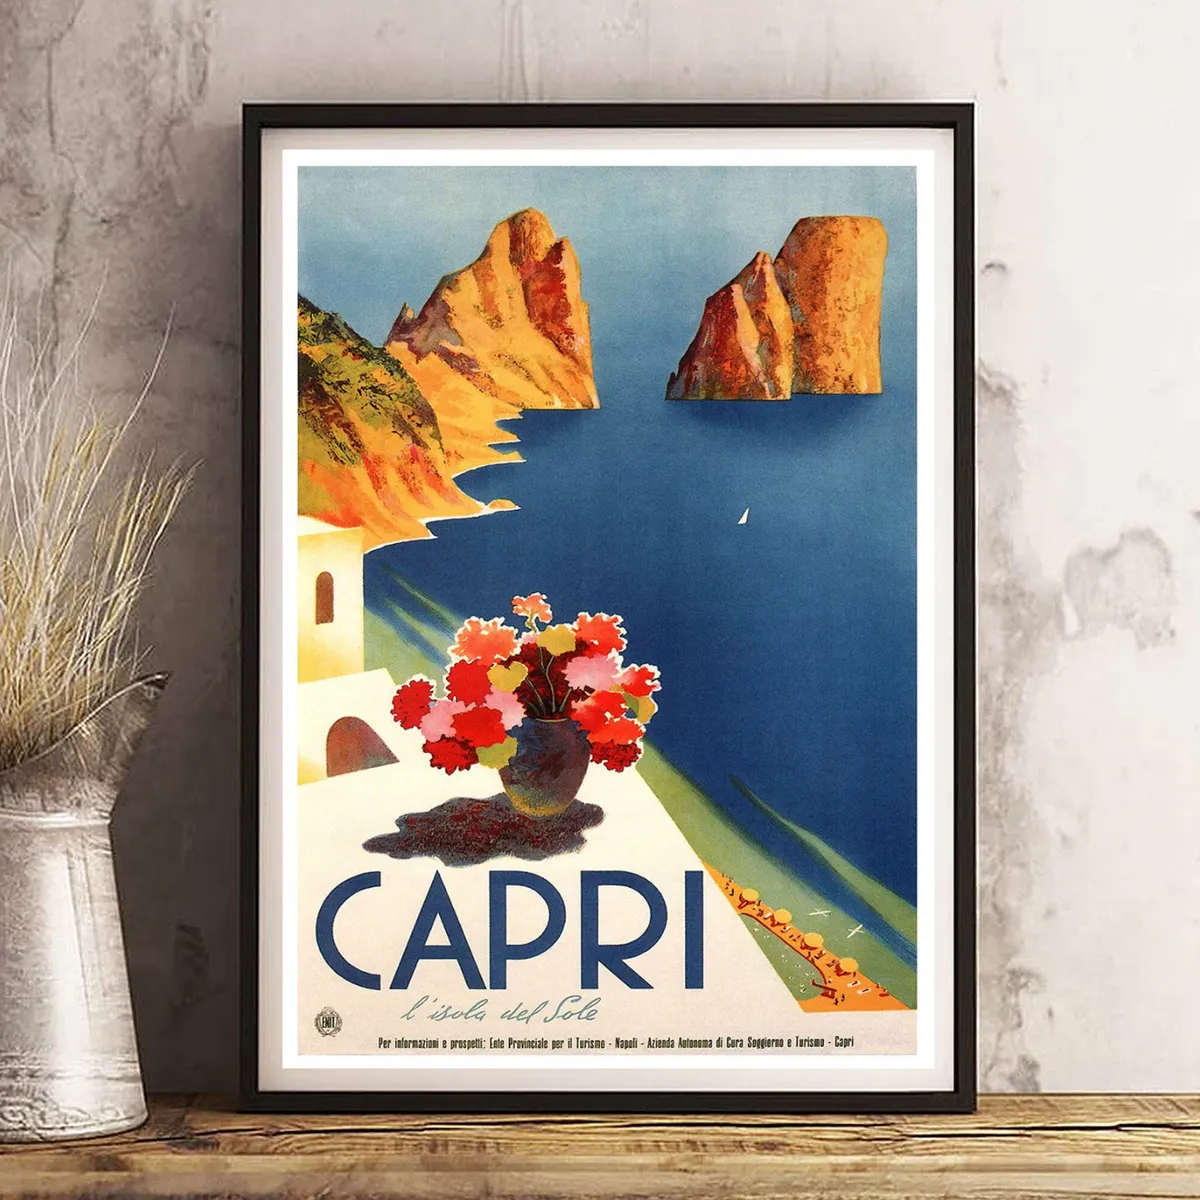 Capri Vintage Travel Poster Print, Classic Posters UK on Etsy